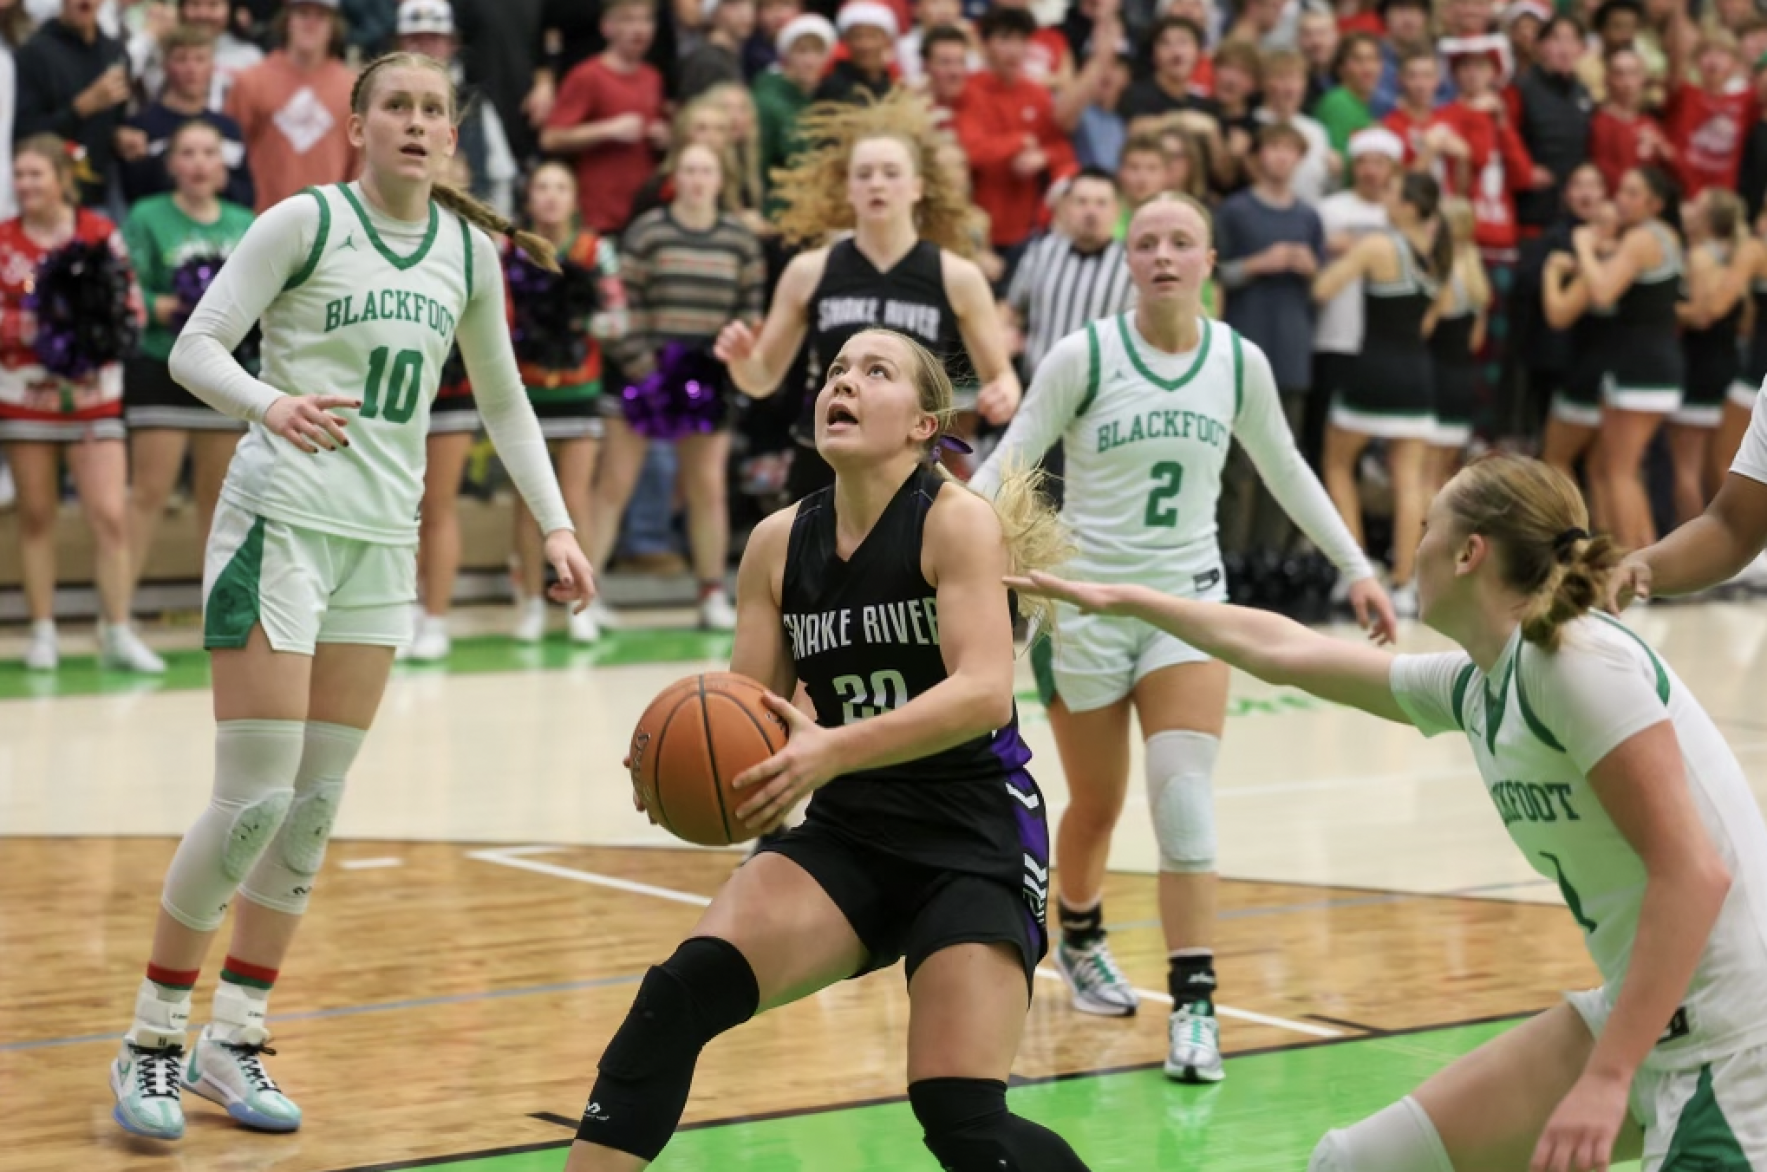 Snake River’s Rylie Edlefsen to Showcase Skills at Idaho High School All-Star Basketball Games